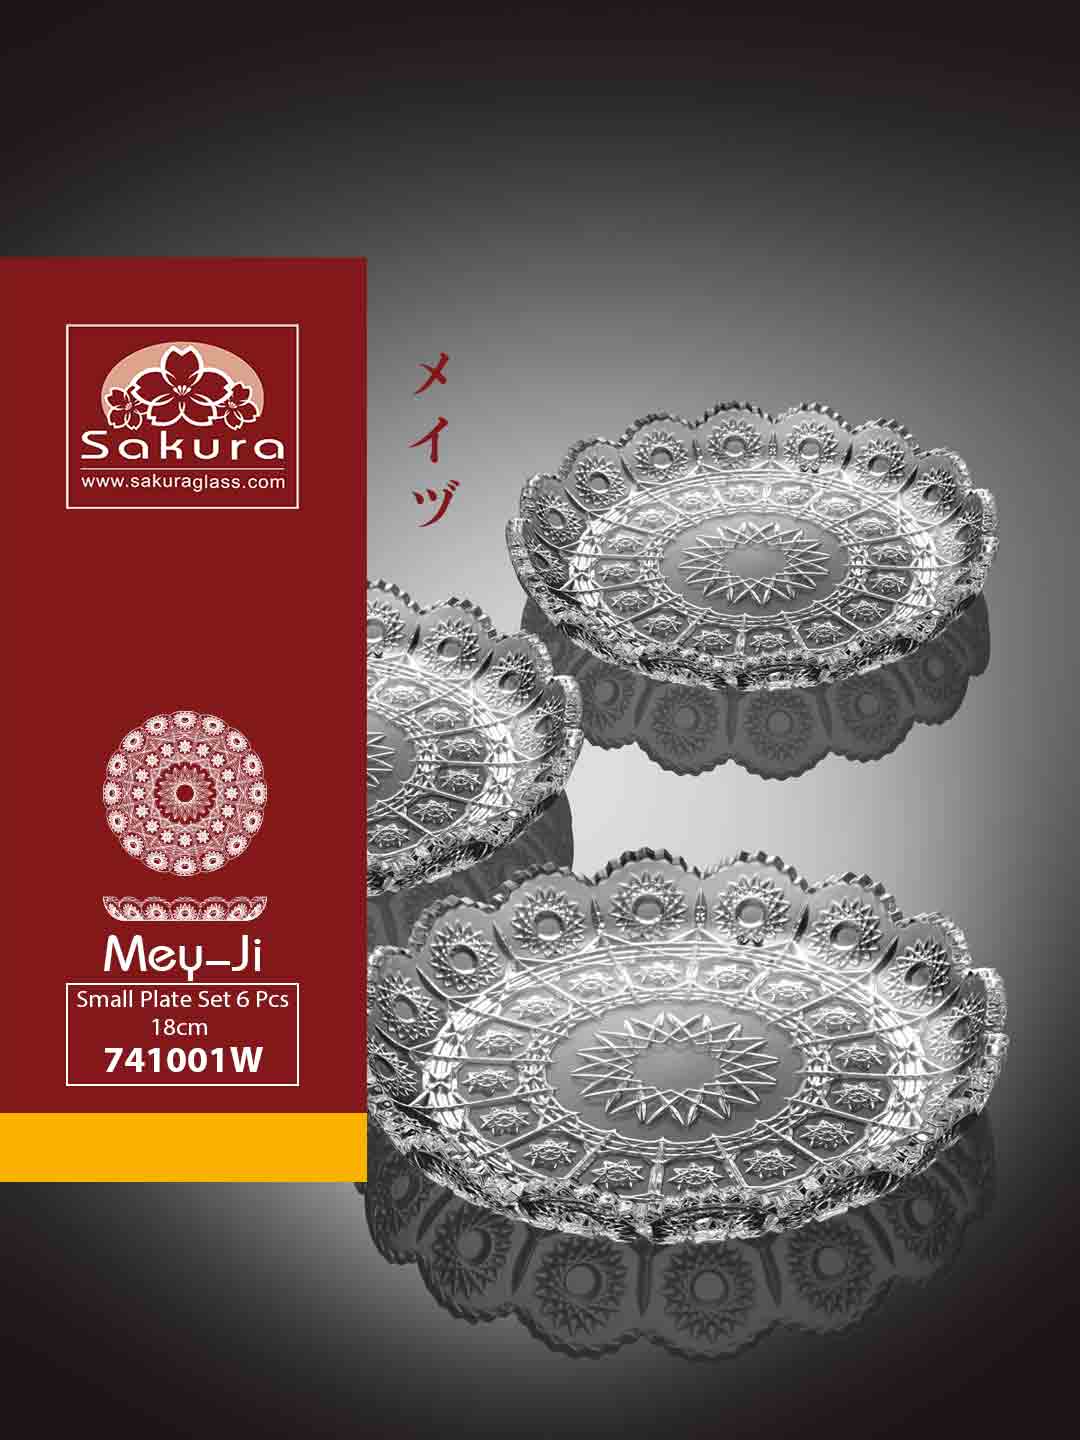 Sakura Product Mey Ji Small Plate Set 6 Pcs 18cm 741001W